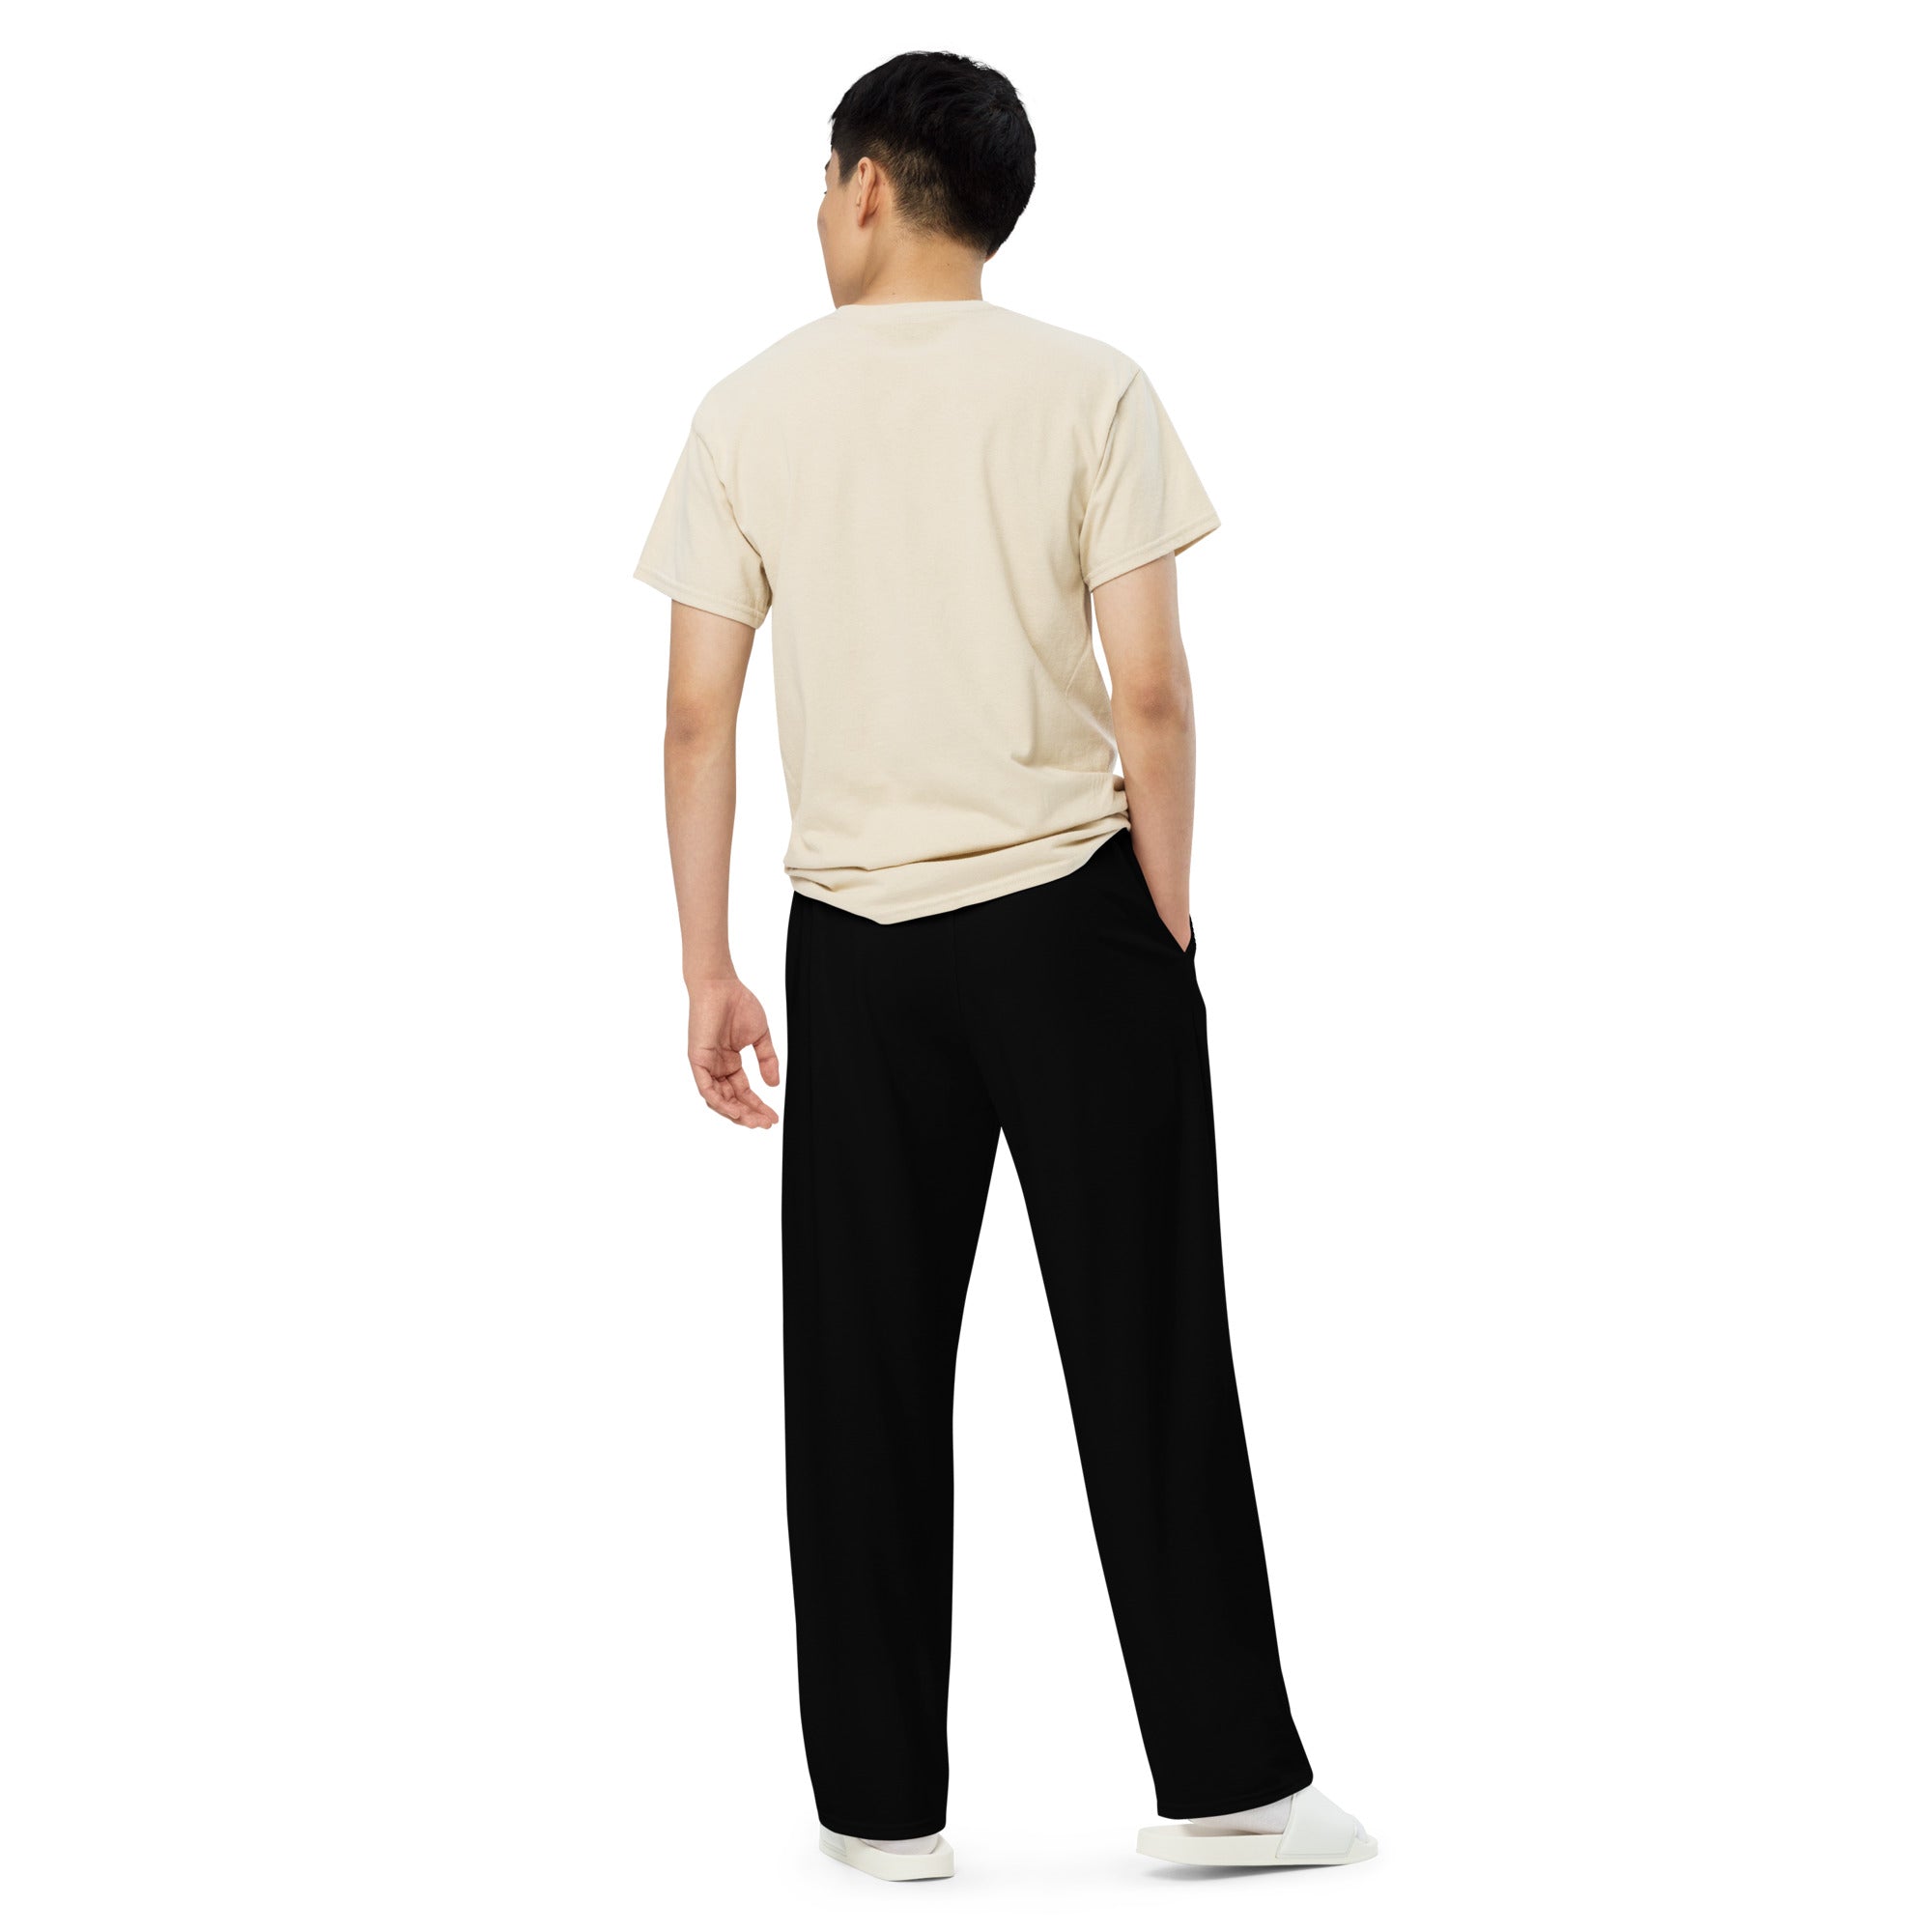 ONSTAGE DL Adult Unisex Wide-leg Pants